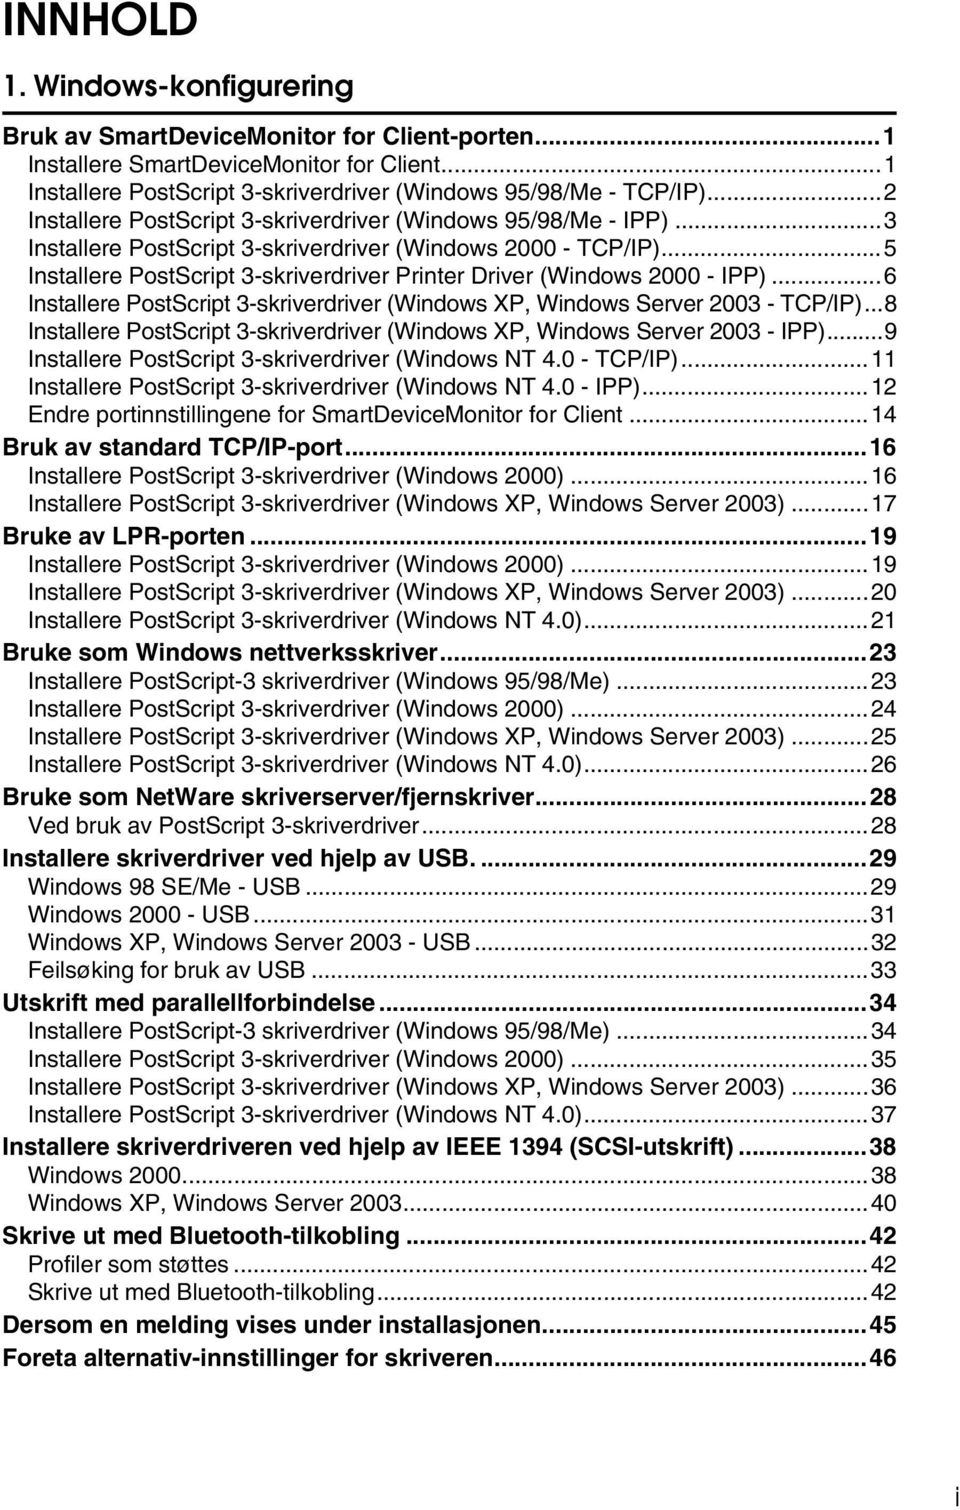 ..5 Installere PostScript 3-skriverdriver Printer Driver (Windows 2000 - IPP)...6 Installere PostScript 3-skriverdriver (Windows XP, Windows Server 2003 - TCP/IP).